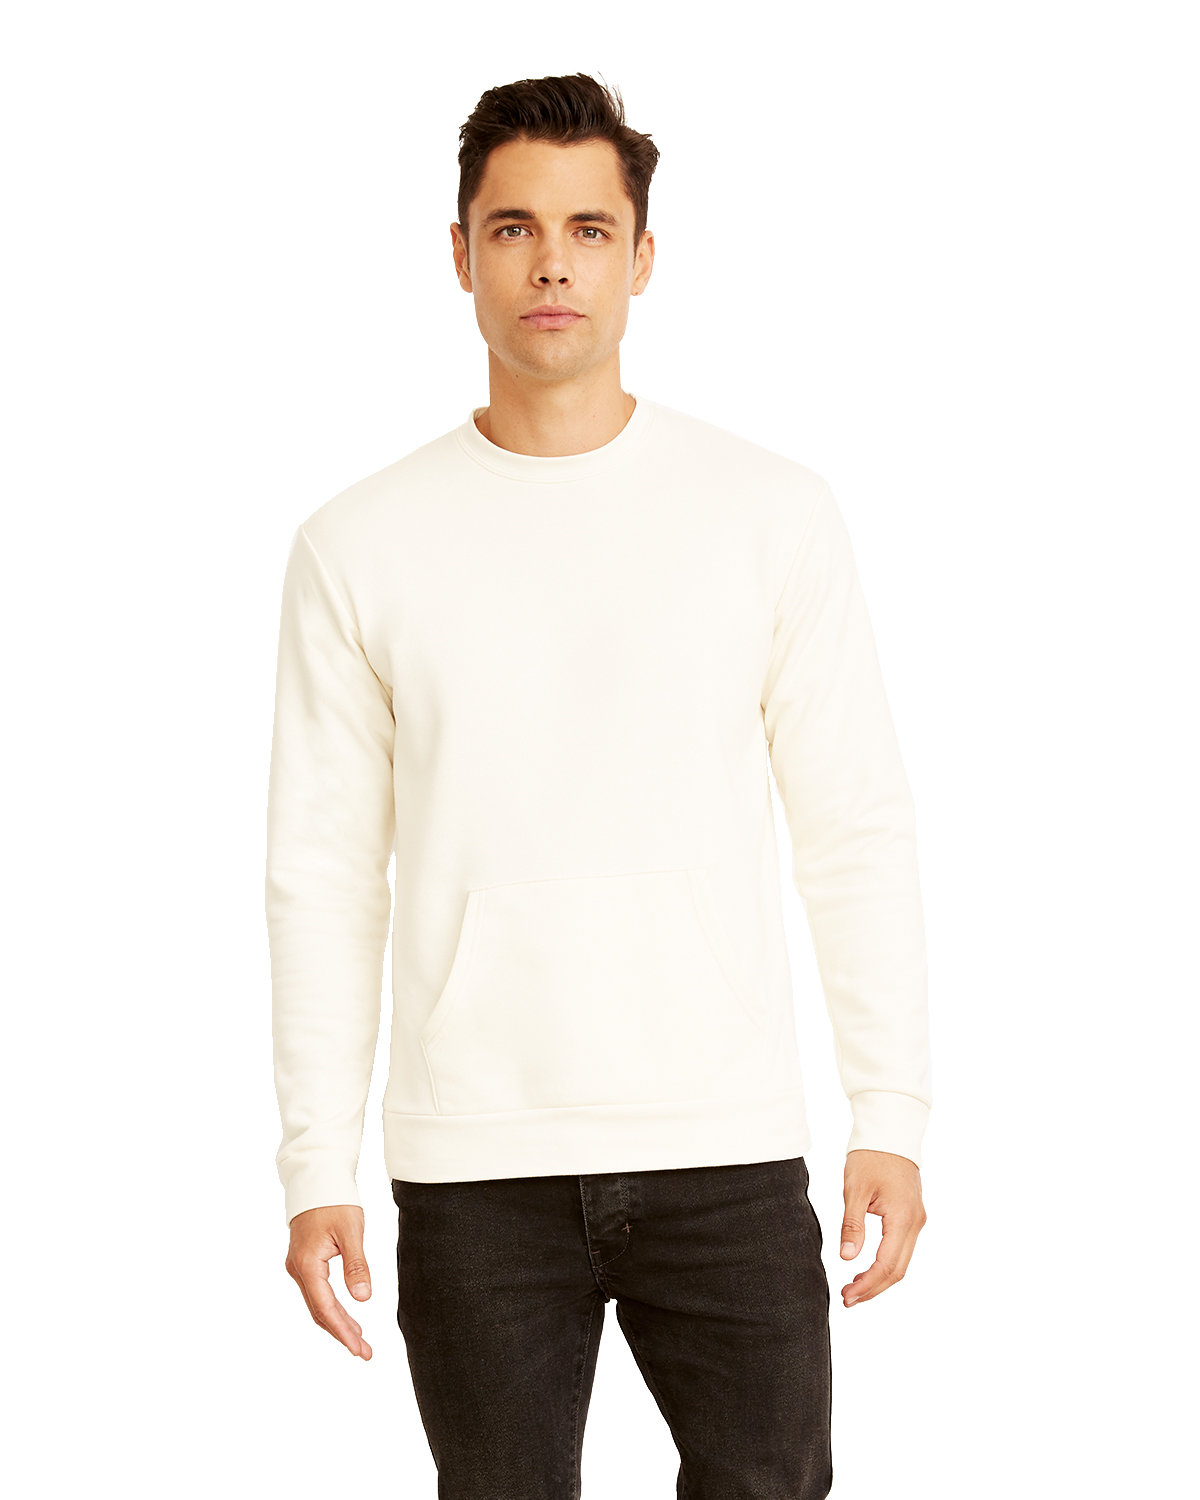 Next Level Apparel Unisex Santa Cruz Pocket Sweatshirt | alphabroder